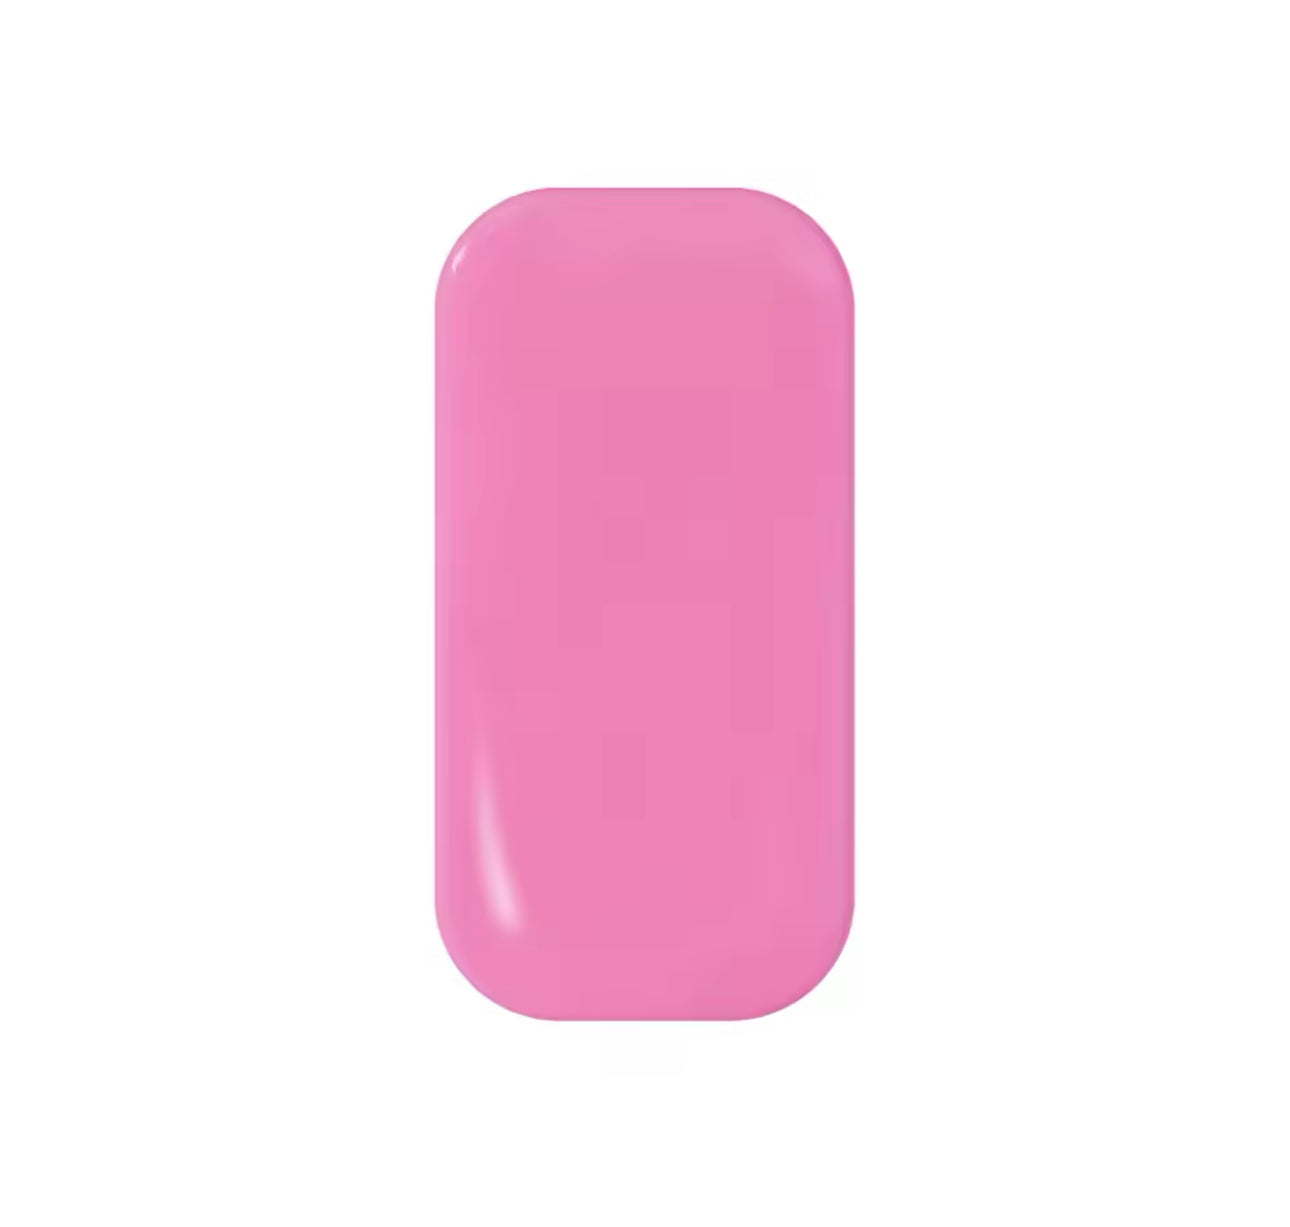 Lash Accessories: Pink Silicone Pad